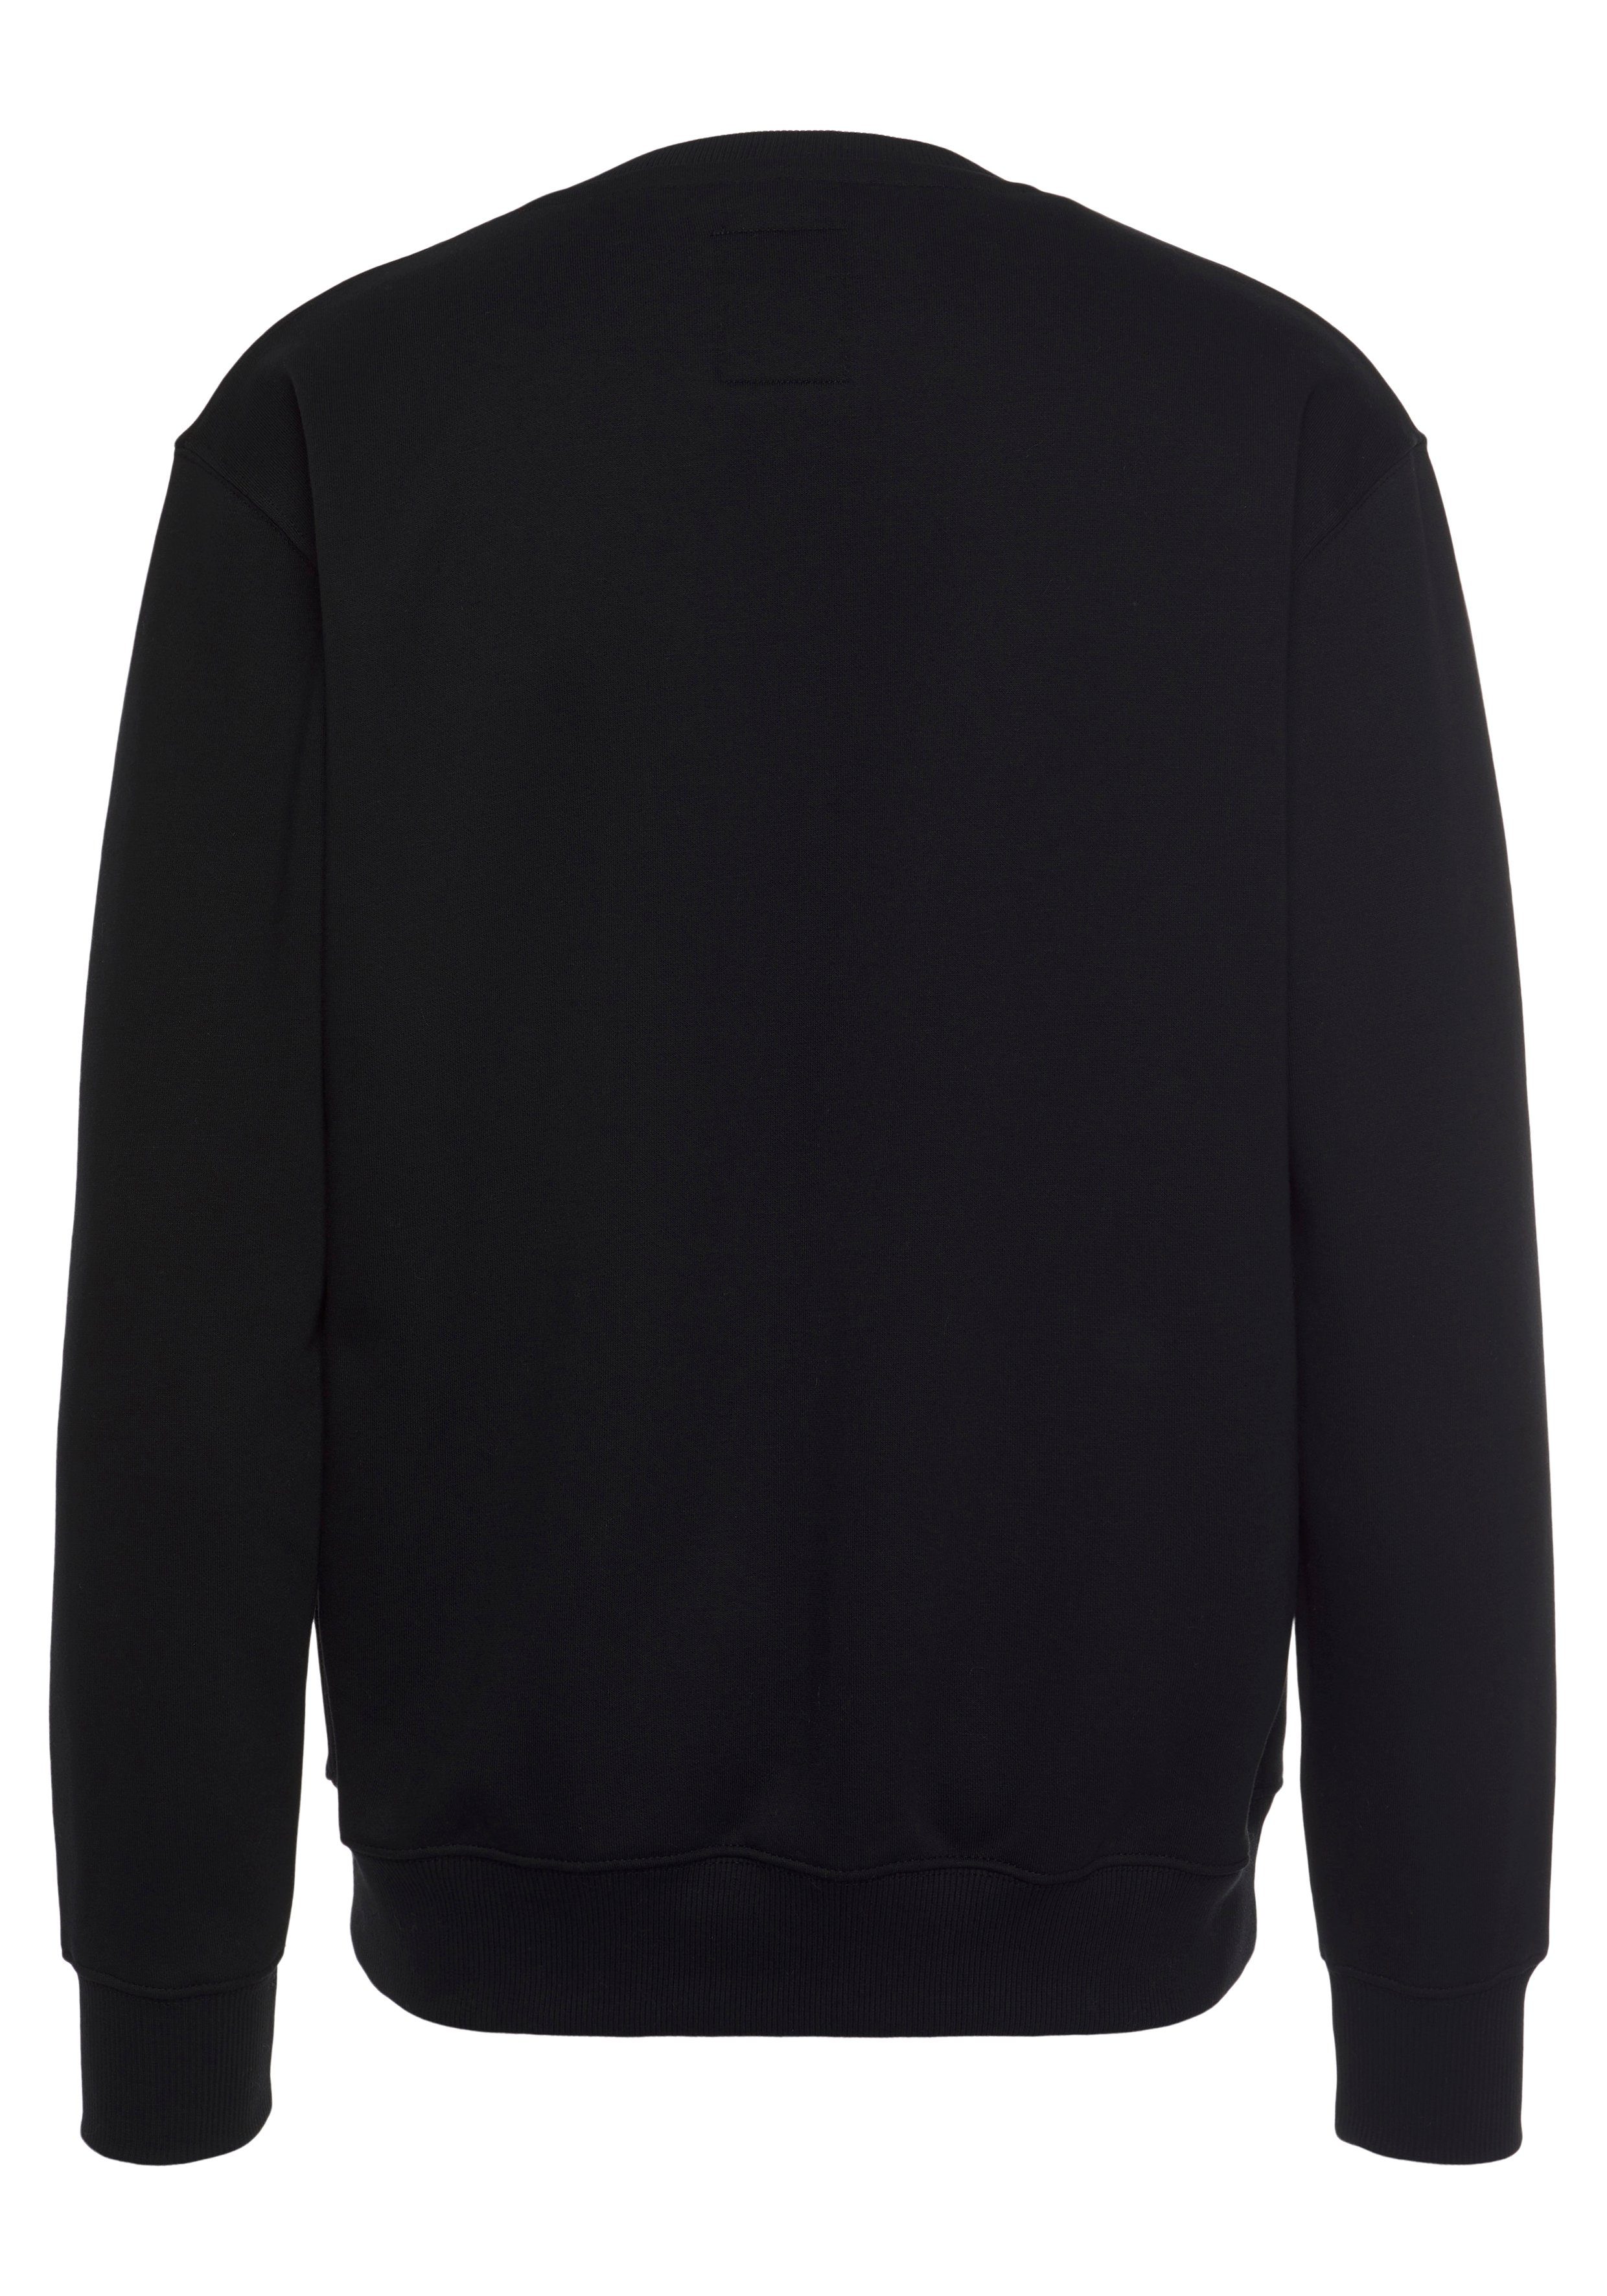 Alpha Industries Sweatshirt Basic black Sweater